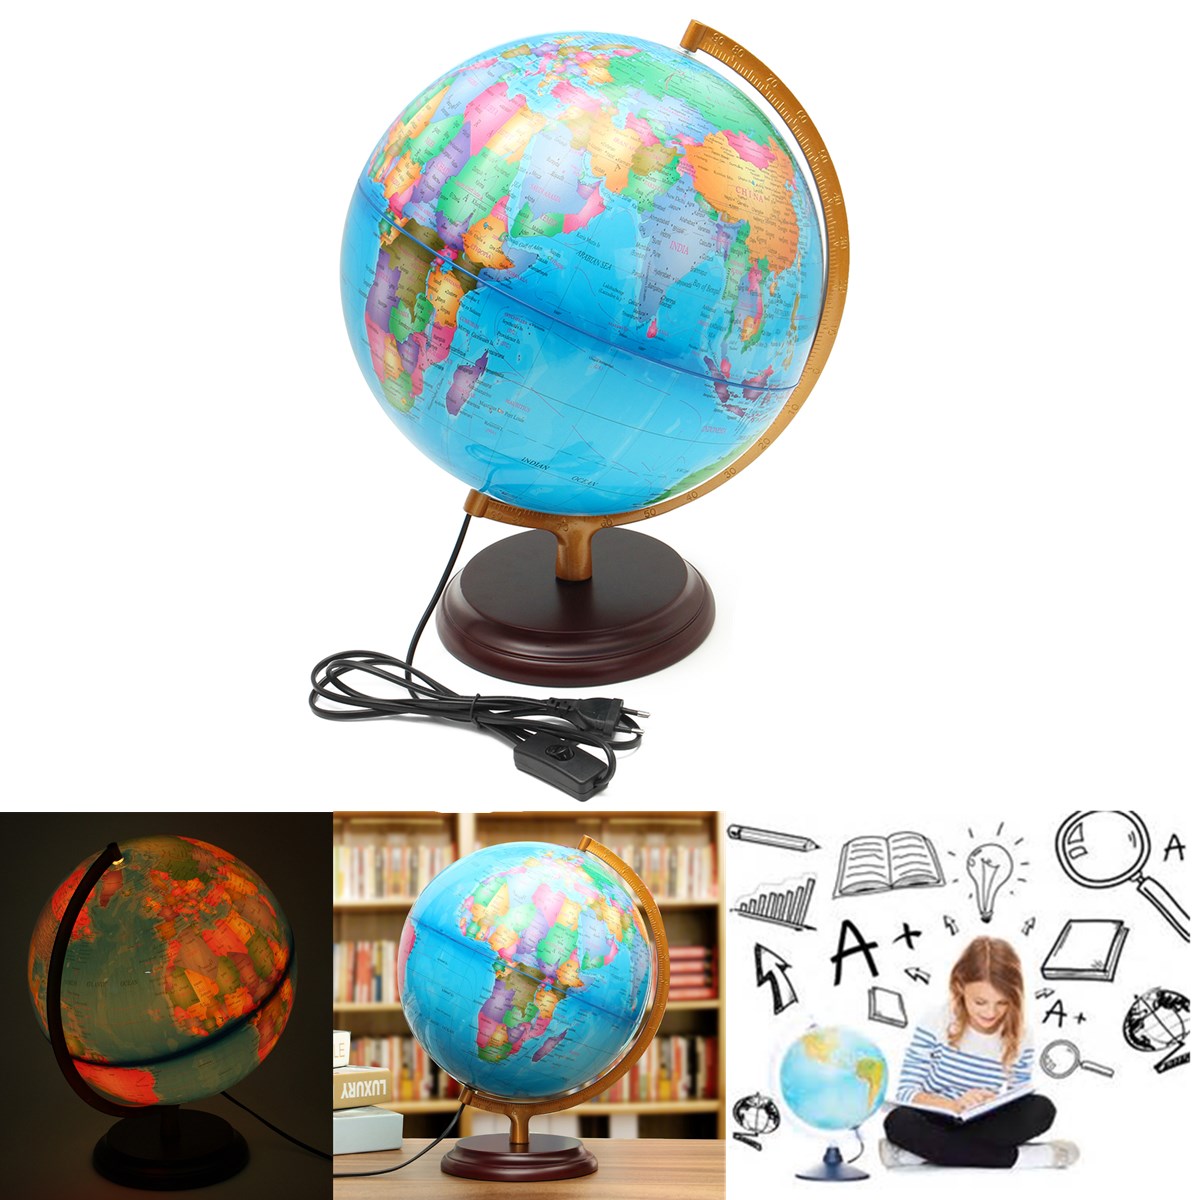 125quot-World-Earth-Globe-Map-Geography-LED-Illuminated-for-Desktop-Decoration-Education-Kids-Gift-1252283-7